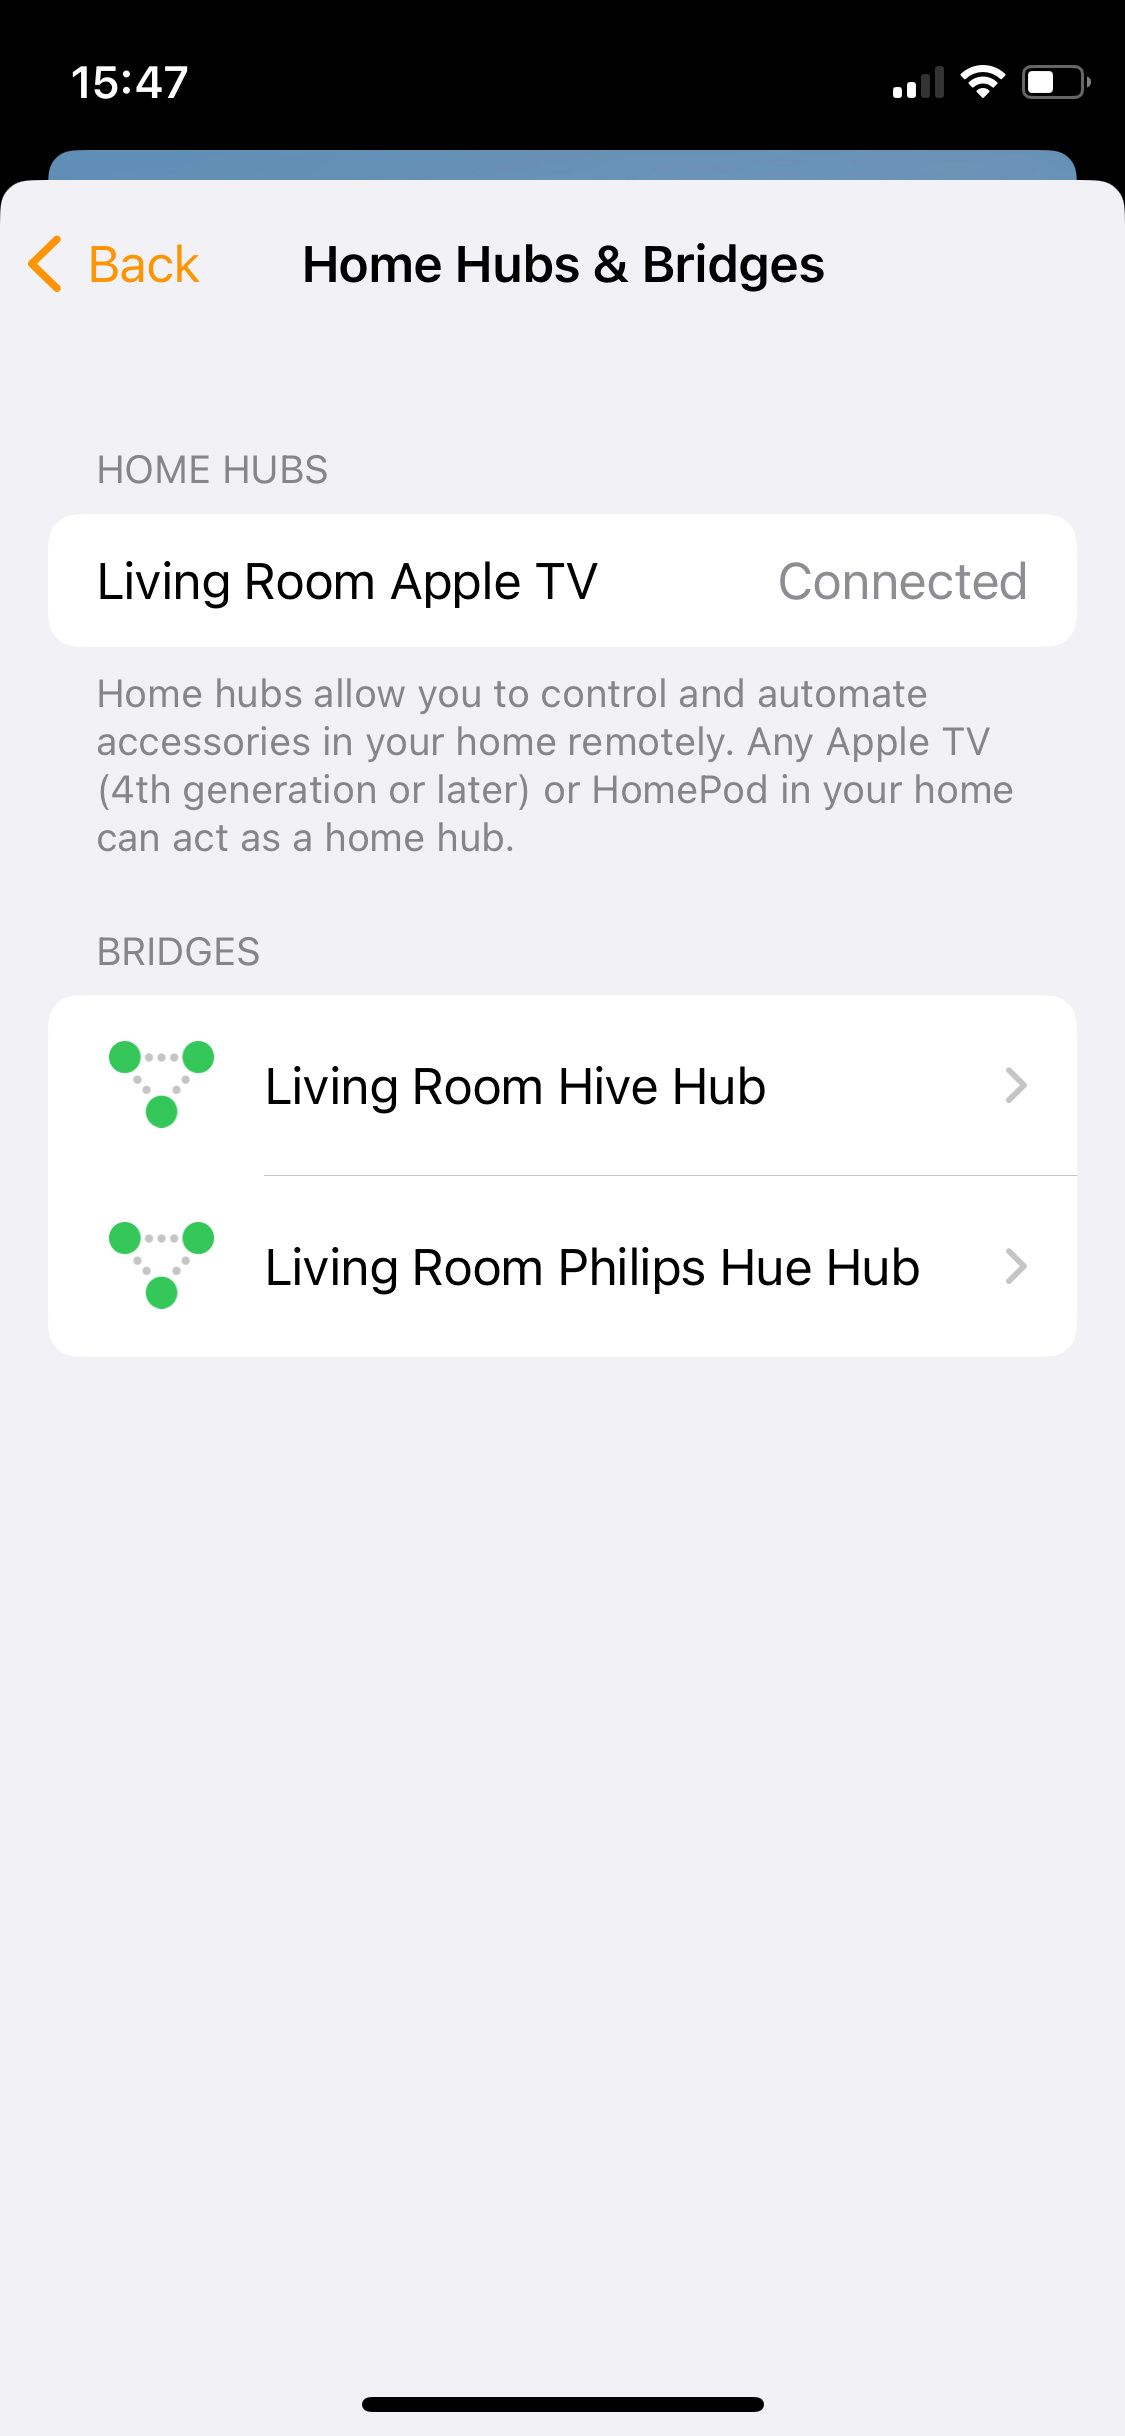 Home Hubs & Bridges in Apple Home app